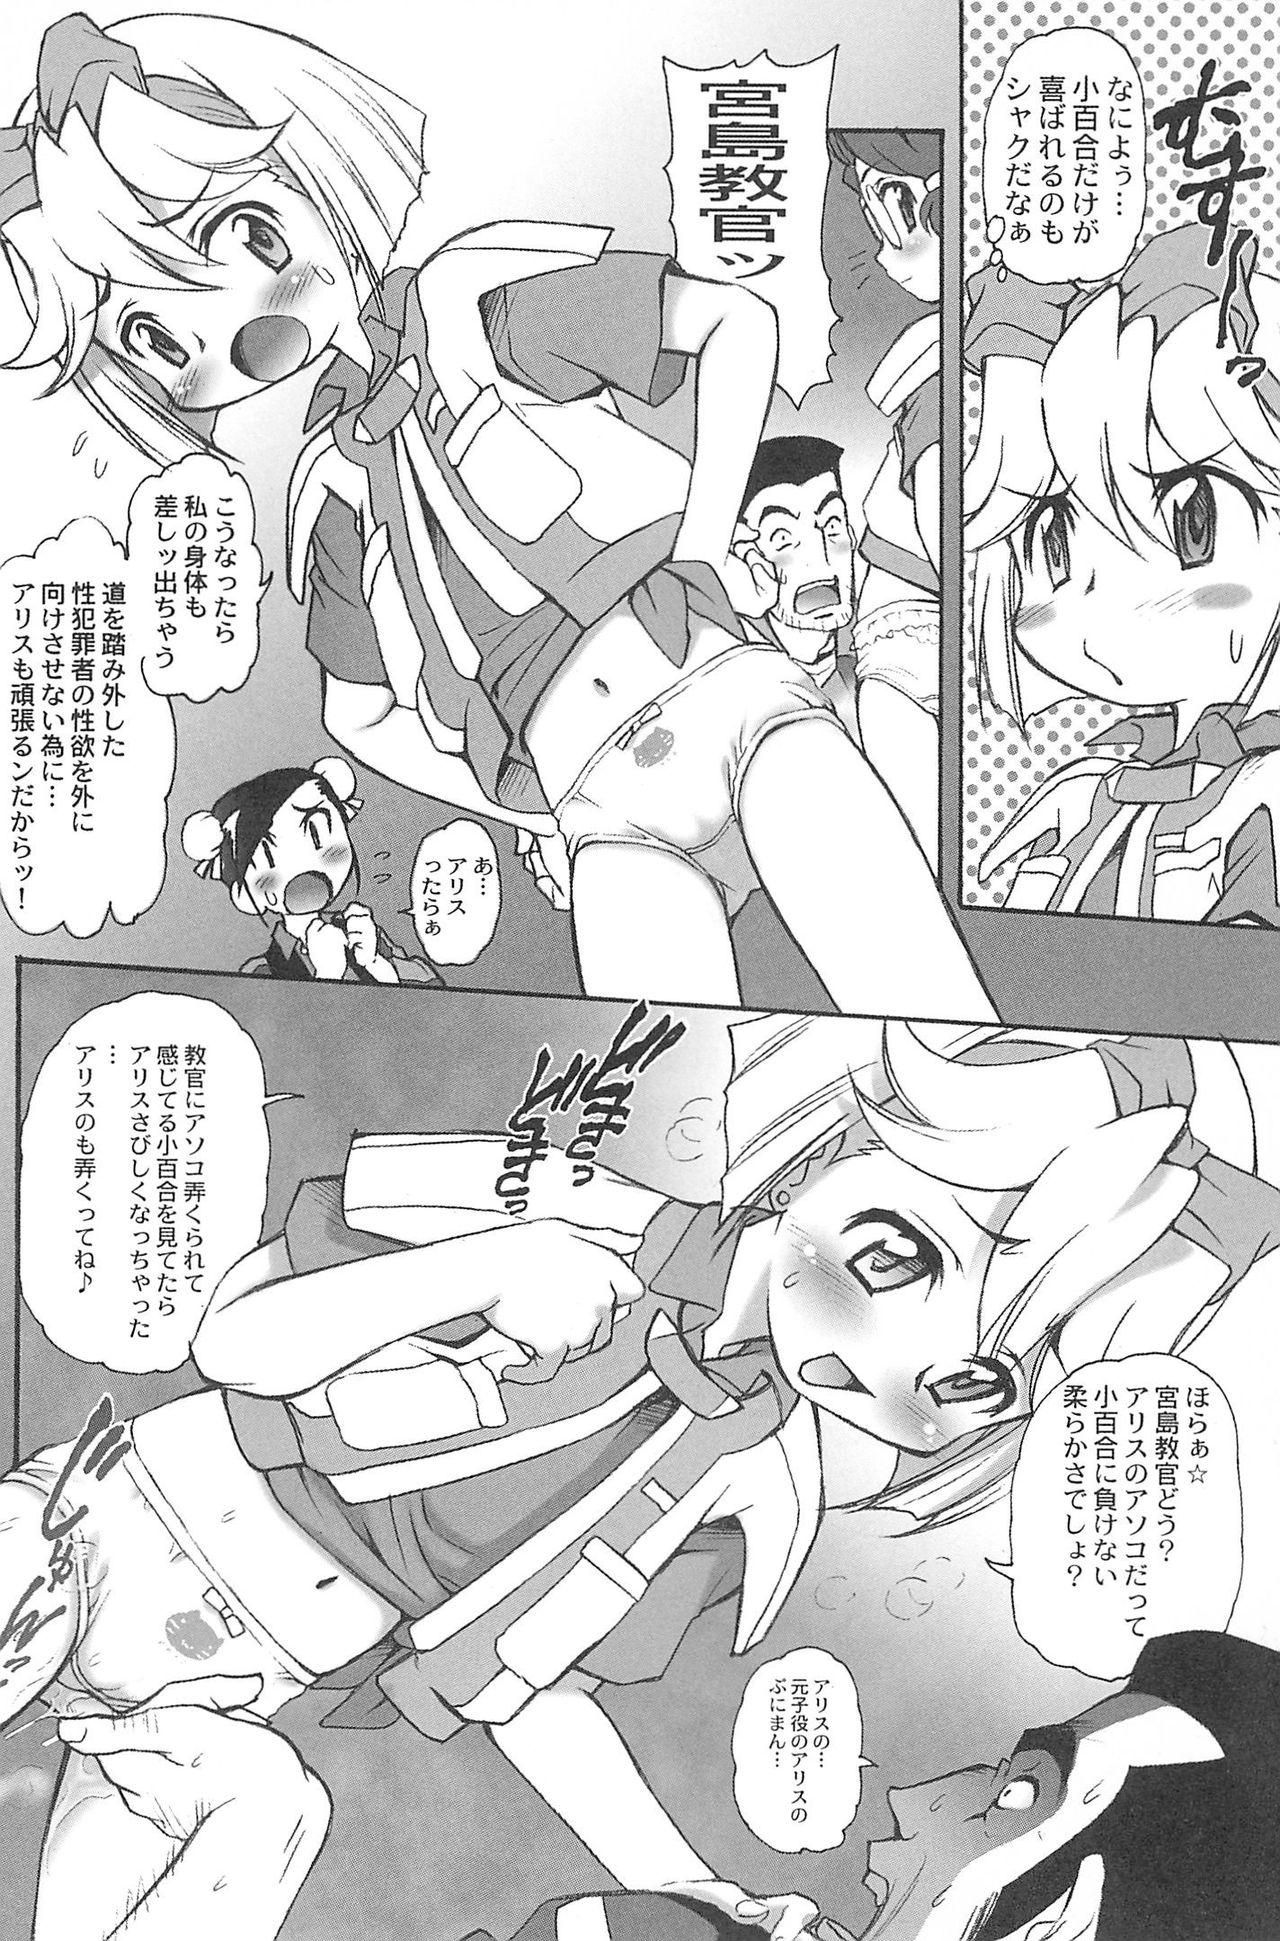 Ariake International X-rated Manga Festival Mercy Rabbit SPECIAL 80